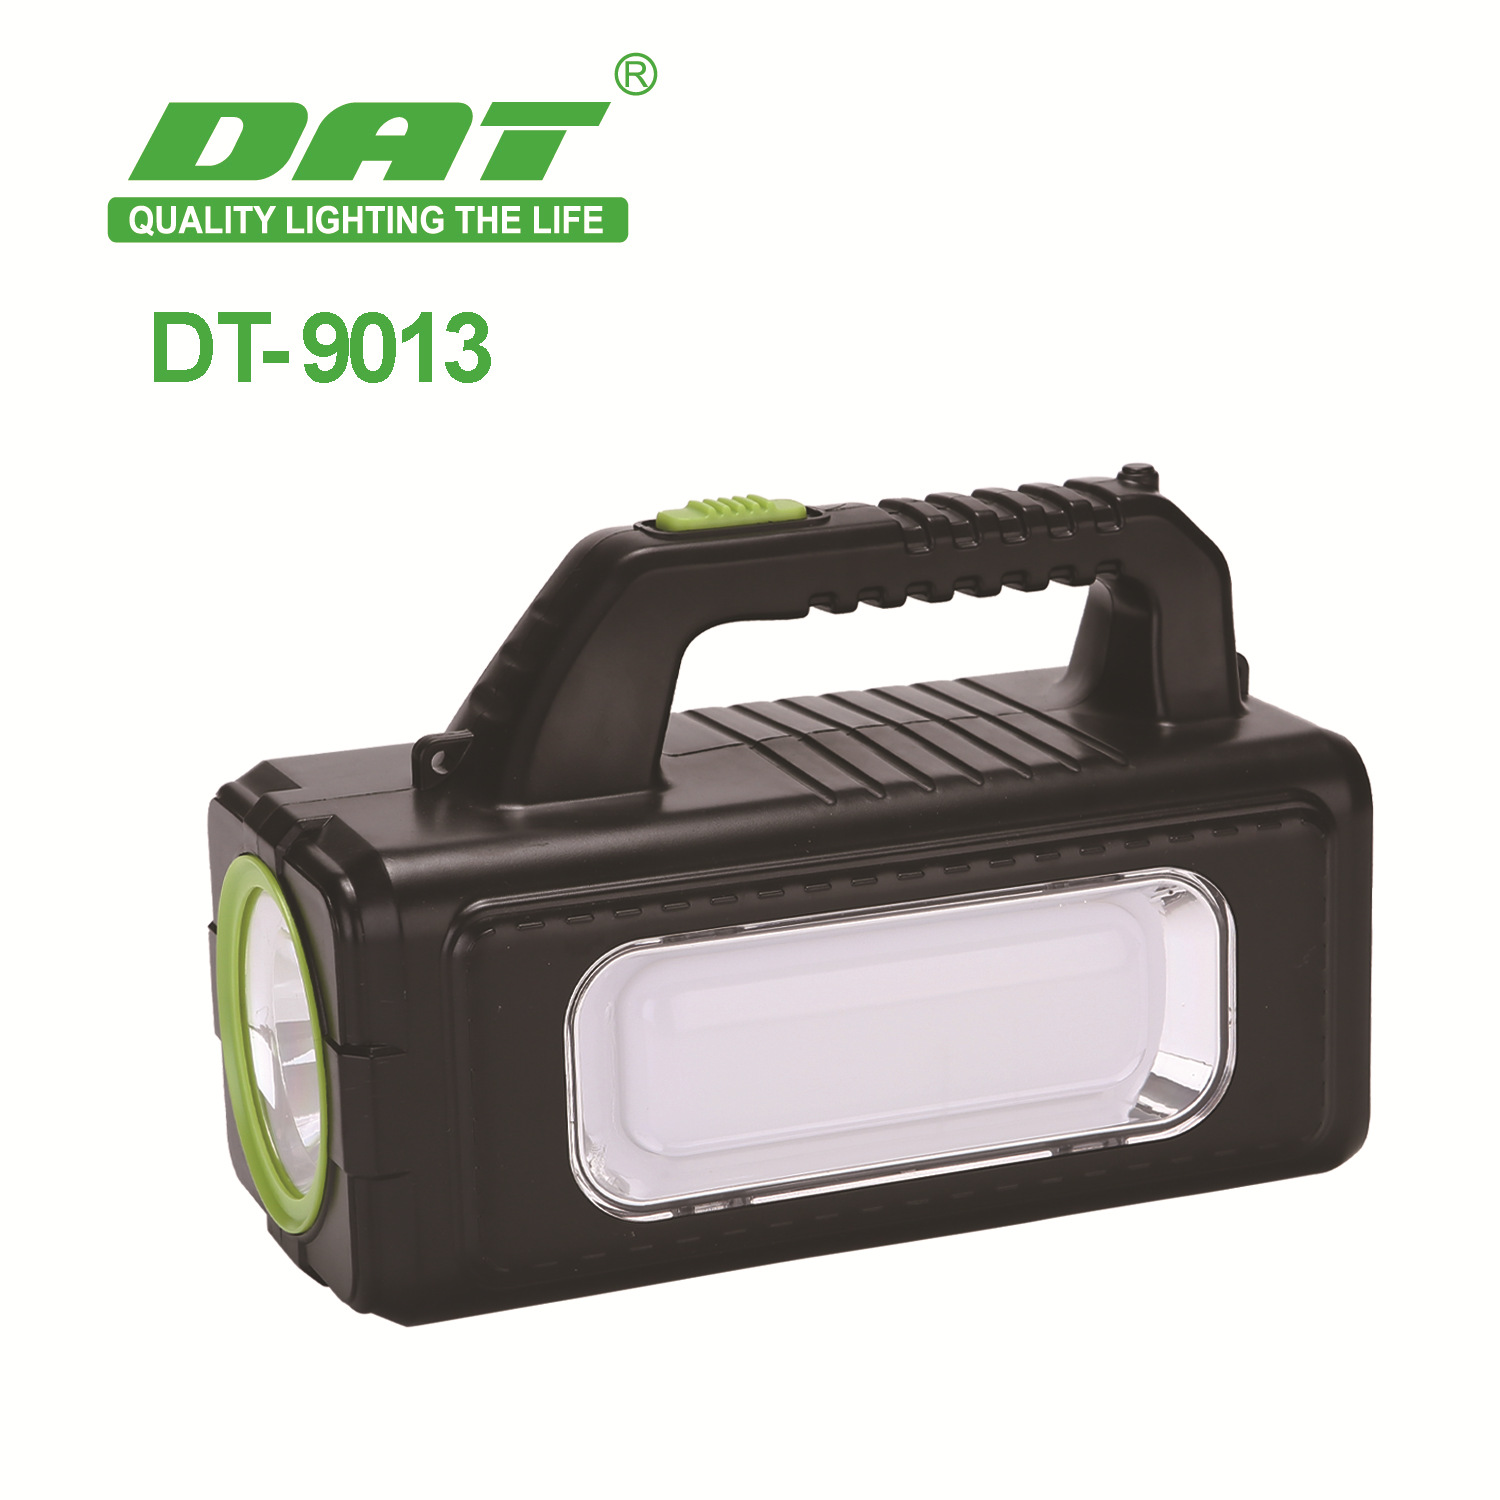 Dt-9013 Outdoor Lighting Led Light Portable Solar Lighting System Emergency Charging Camping Lamp